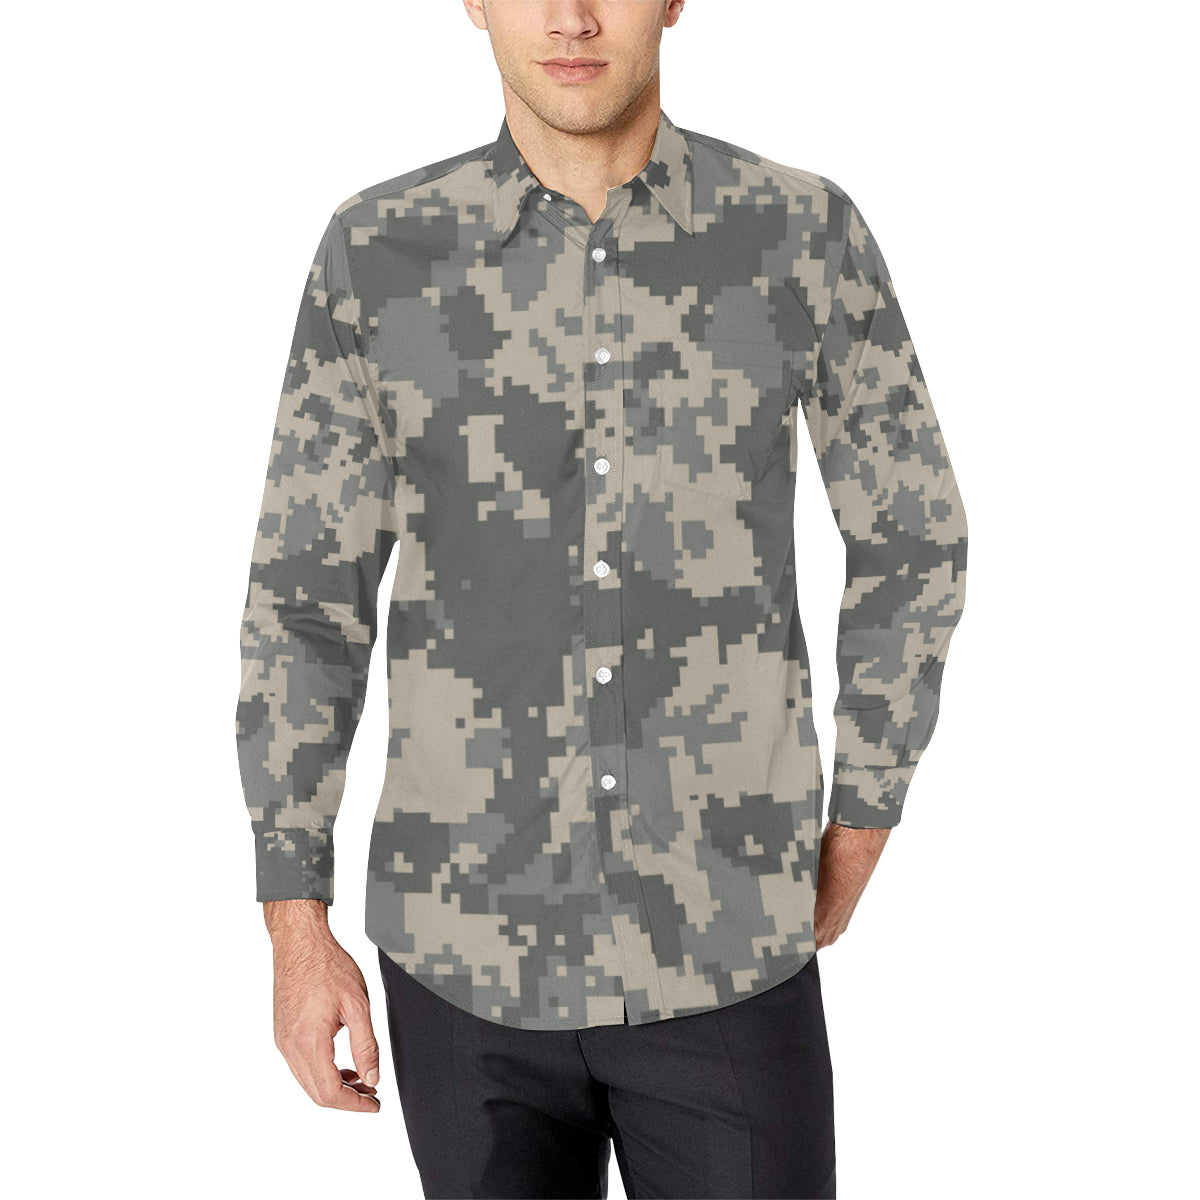 ACU Digital Camouflage Men's Long Sleeve Shirt